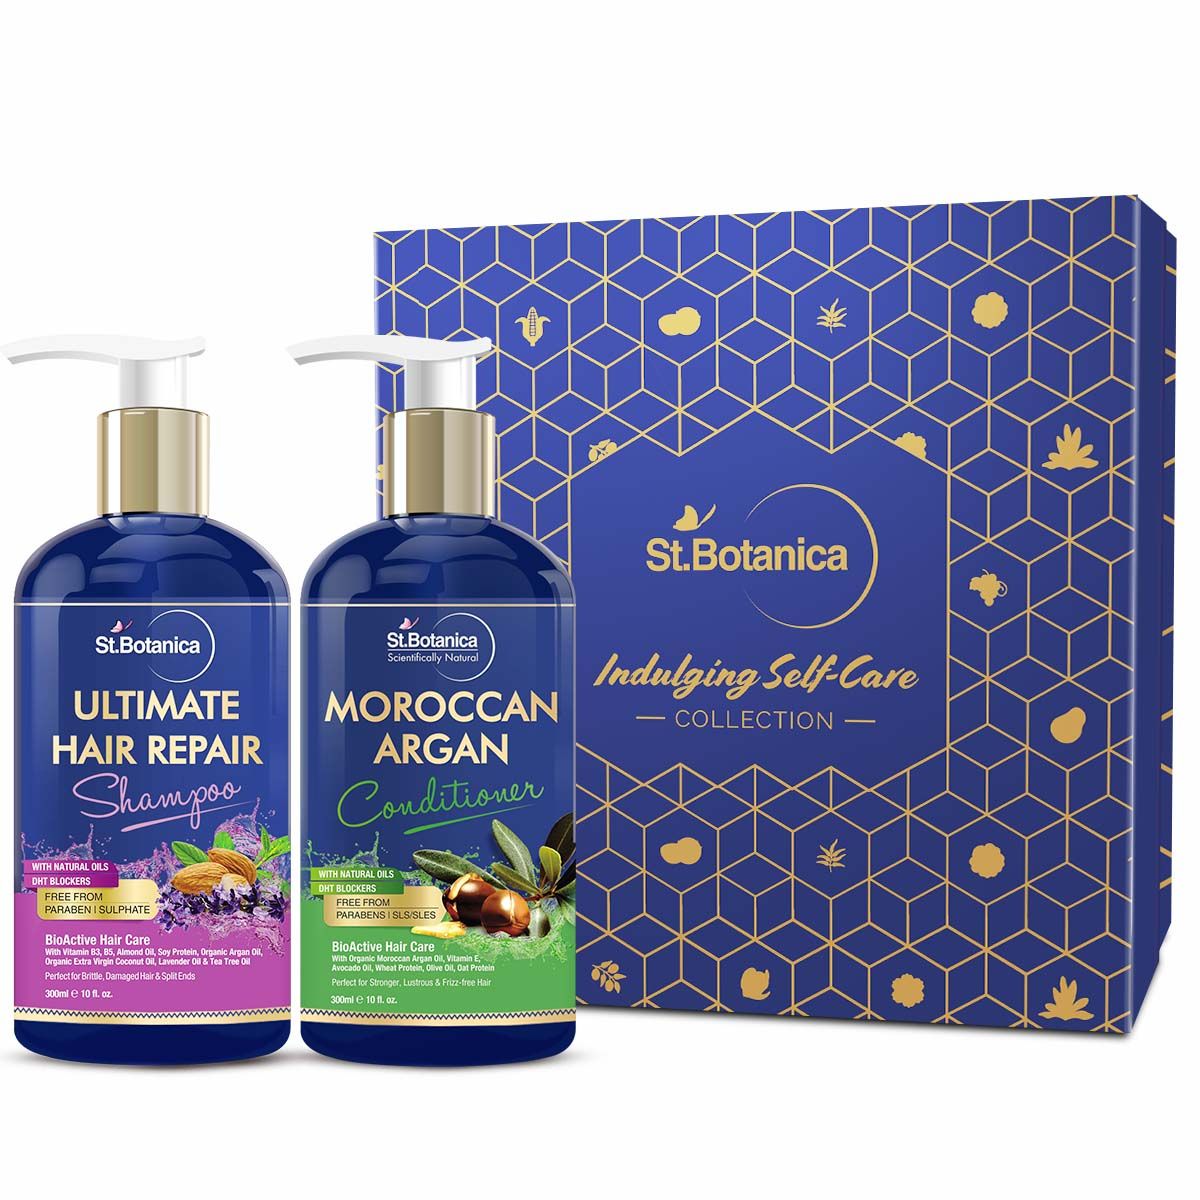 St.Botanica Ultimate Hair Repair Shampoo & Moroccan Argan Hair Conditioner